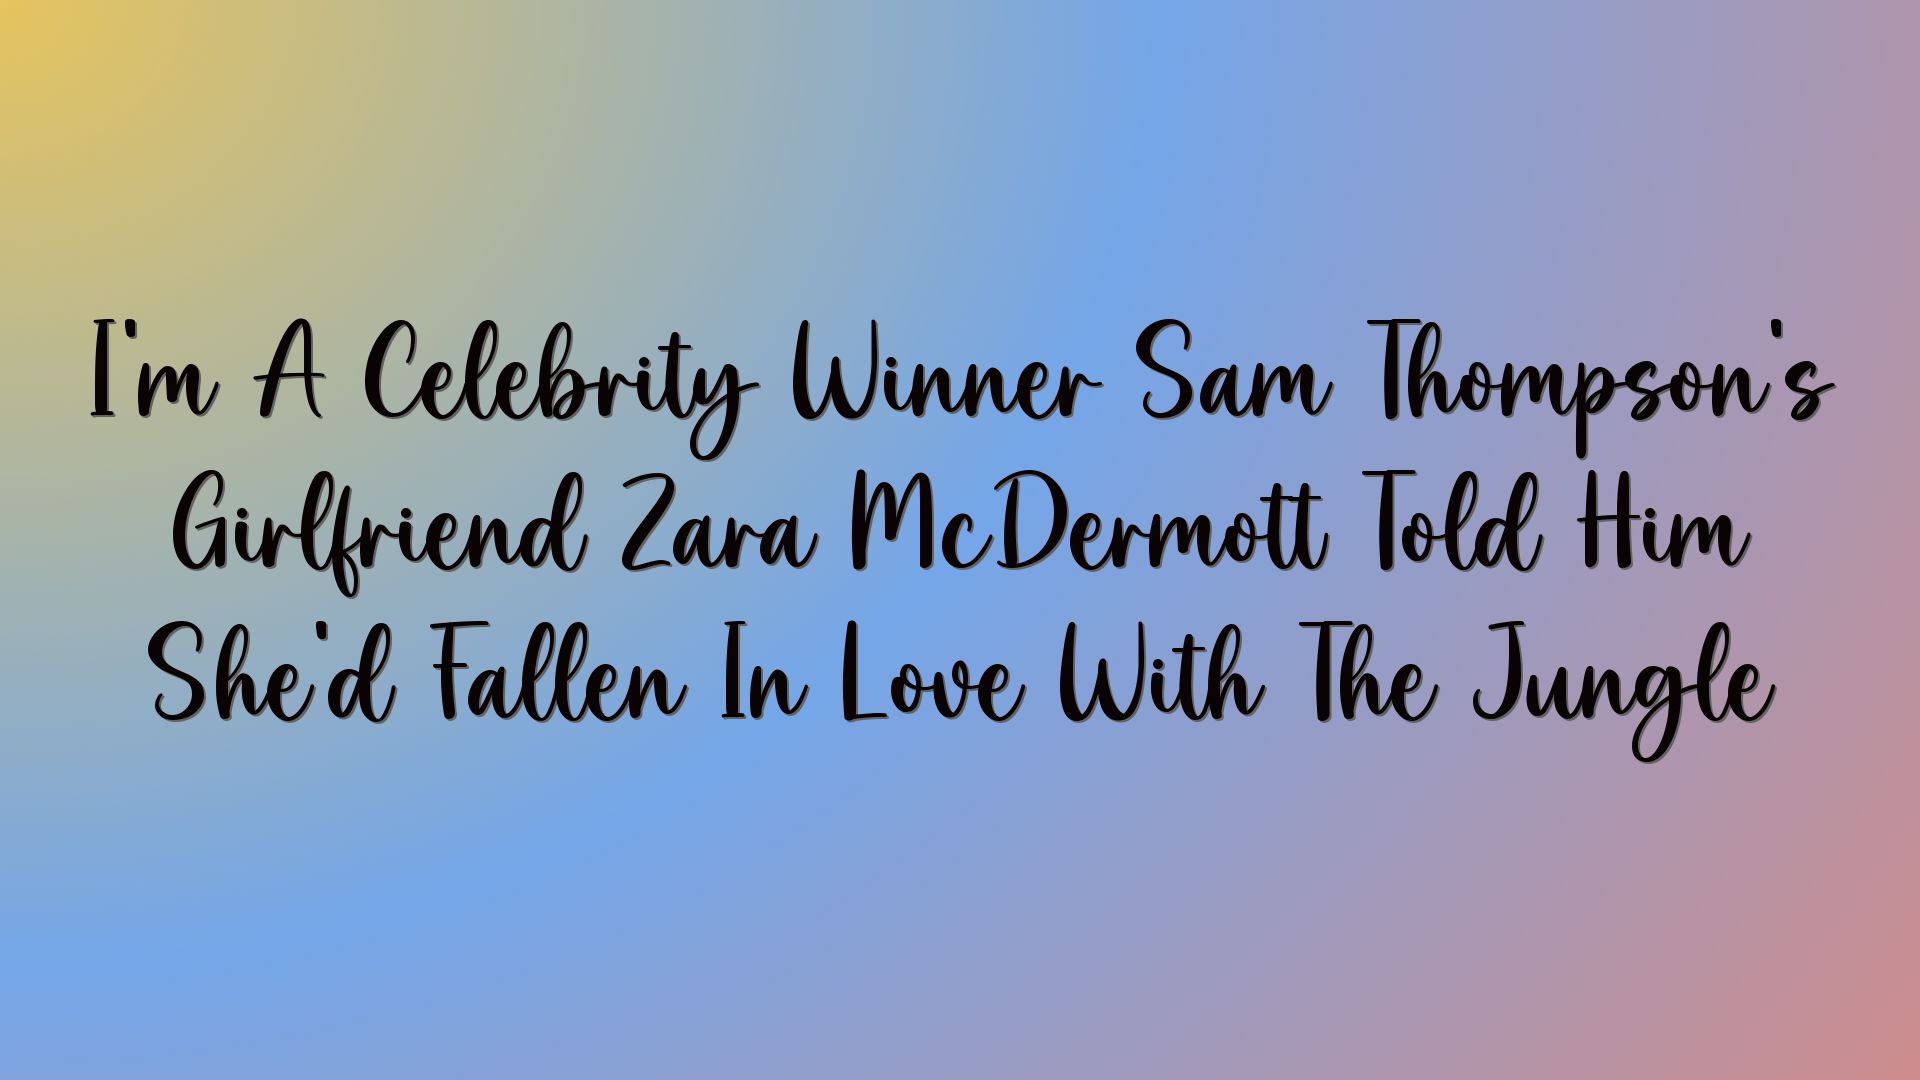 I’m A Celebrity Winner Sam Thompson’s Girlfriend Zara McDermott Told Him She’d Fallen In Love With The Jungle